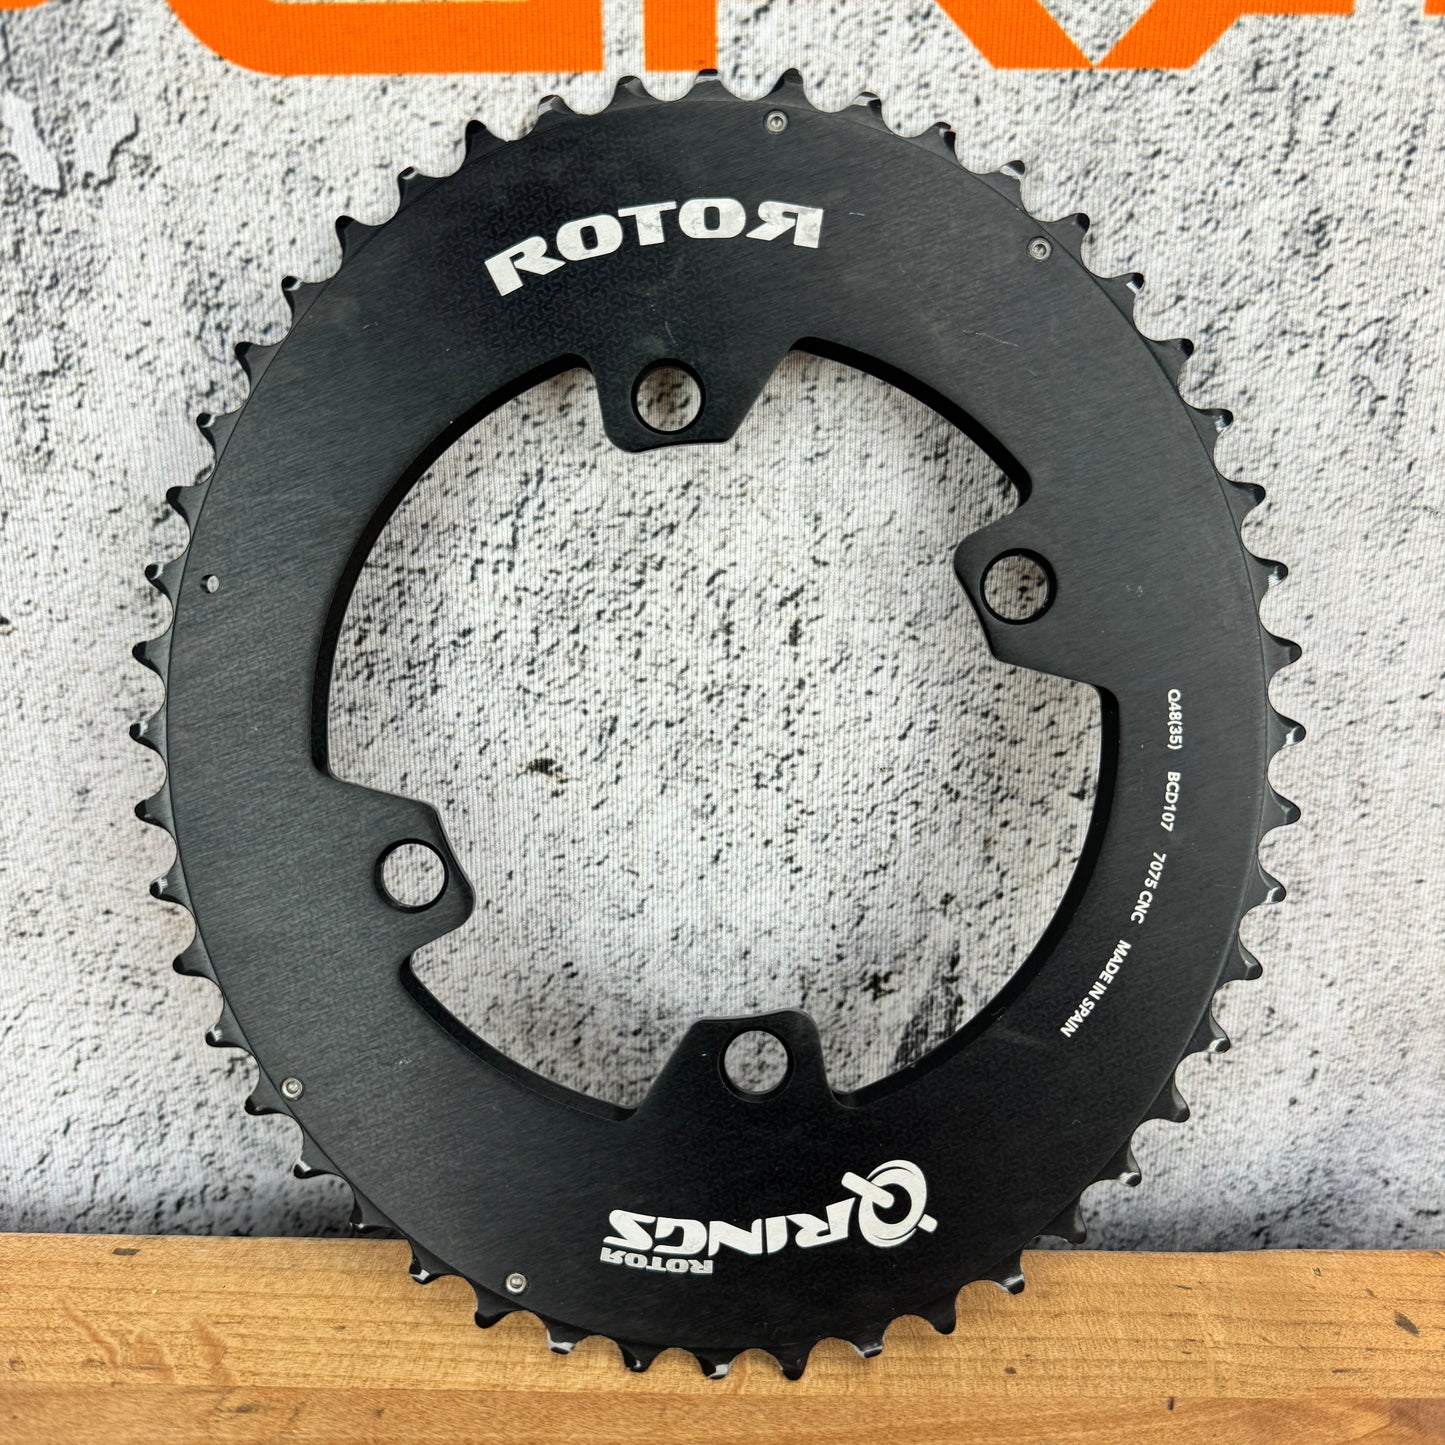 Rotor Q Rings 48/35t 4-Bolt 107BCD Pair Bike Chainrings 150g